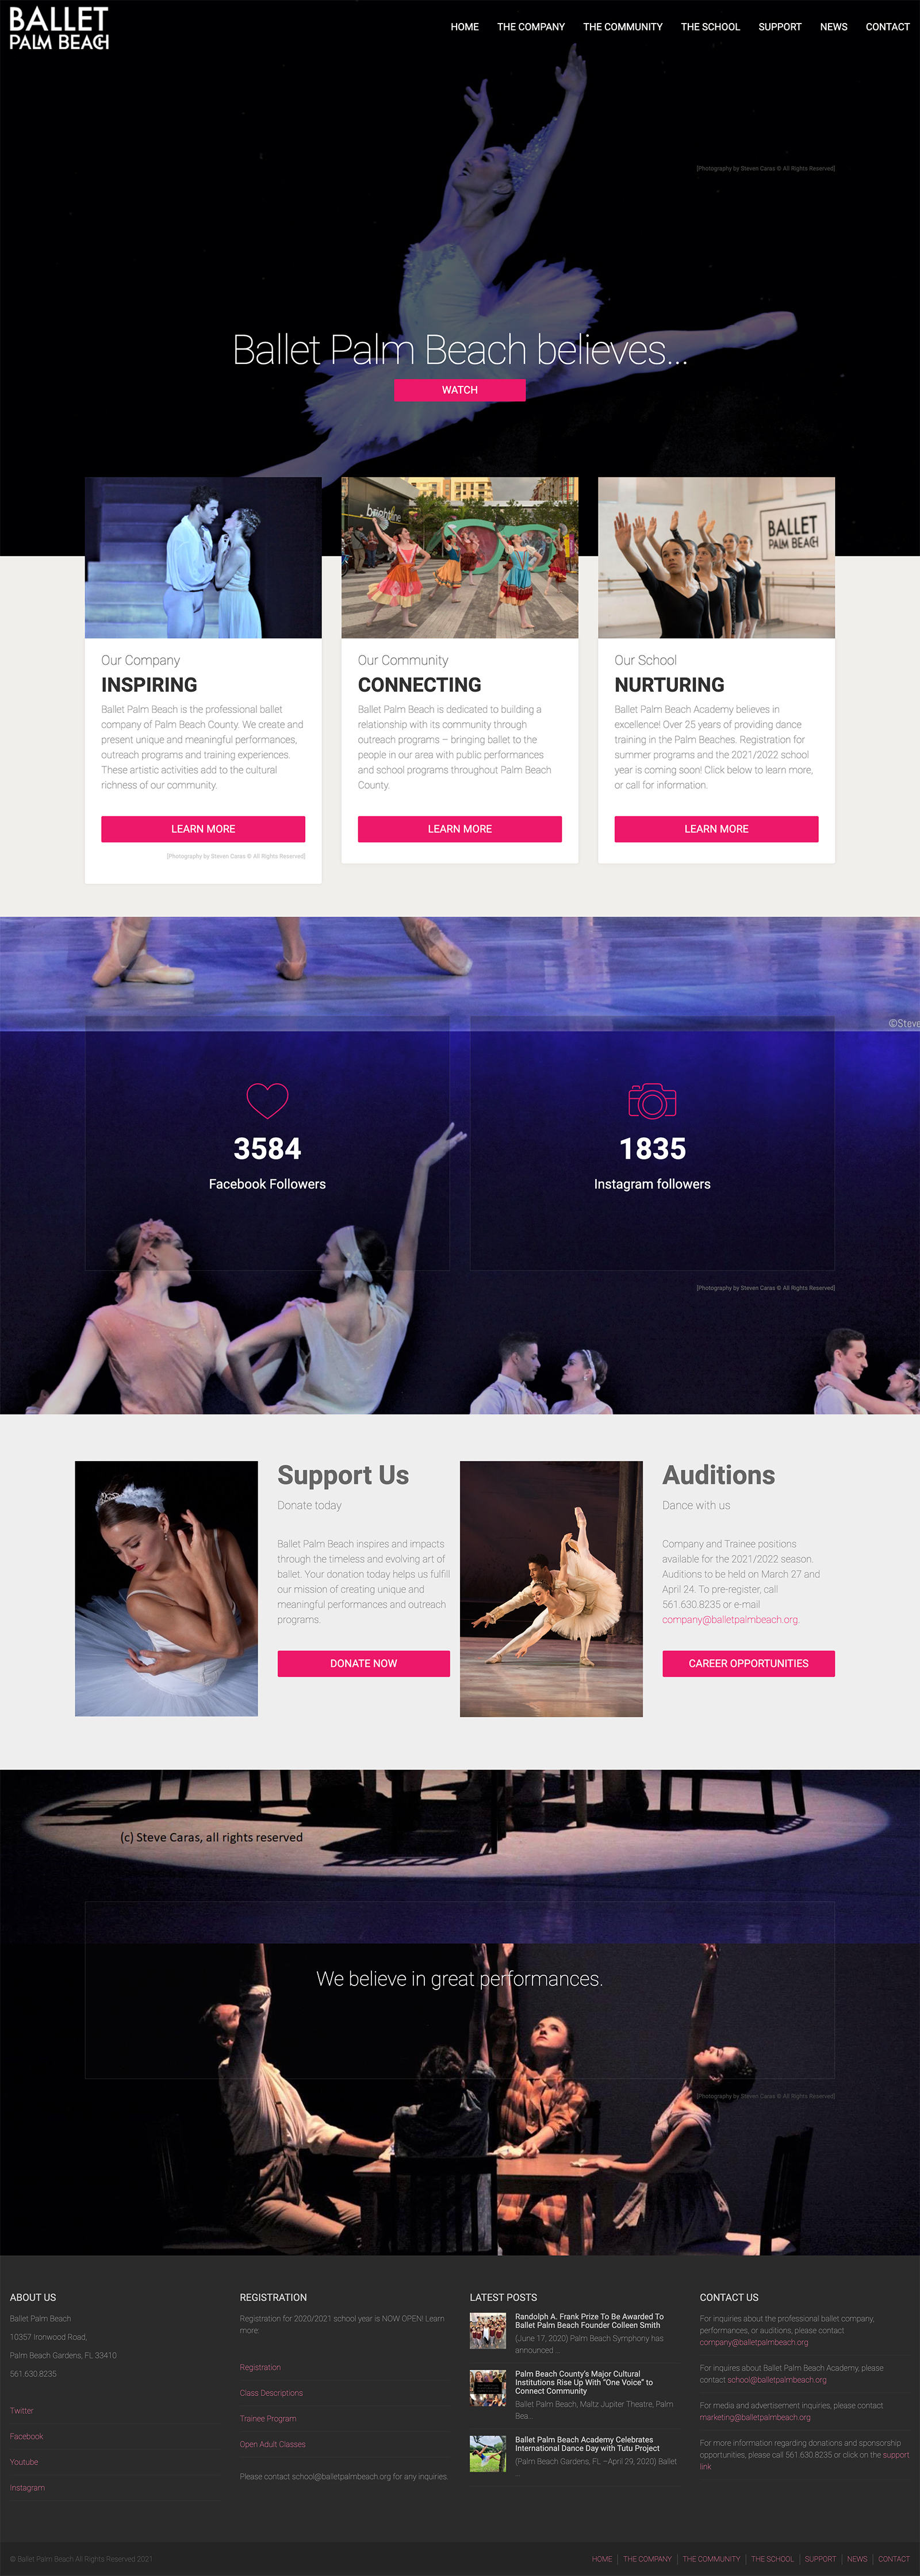 balletpalmbeach-org-2021